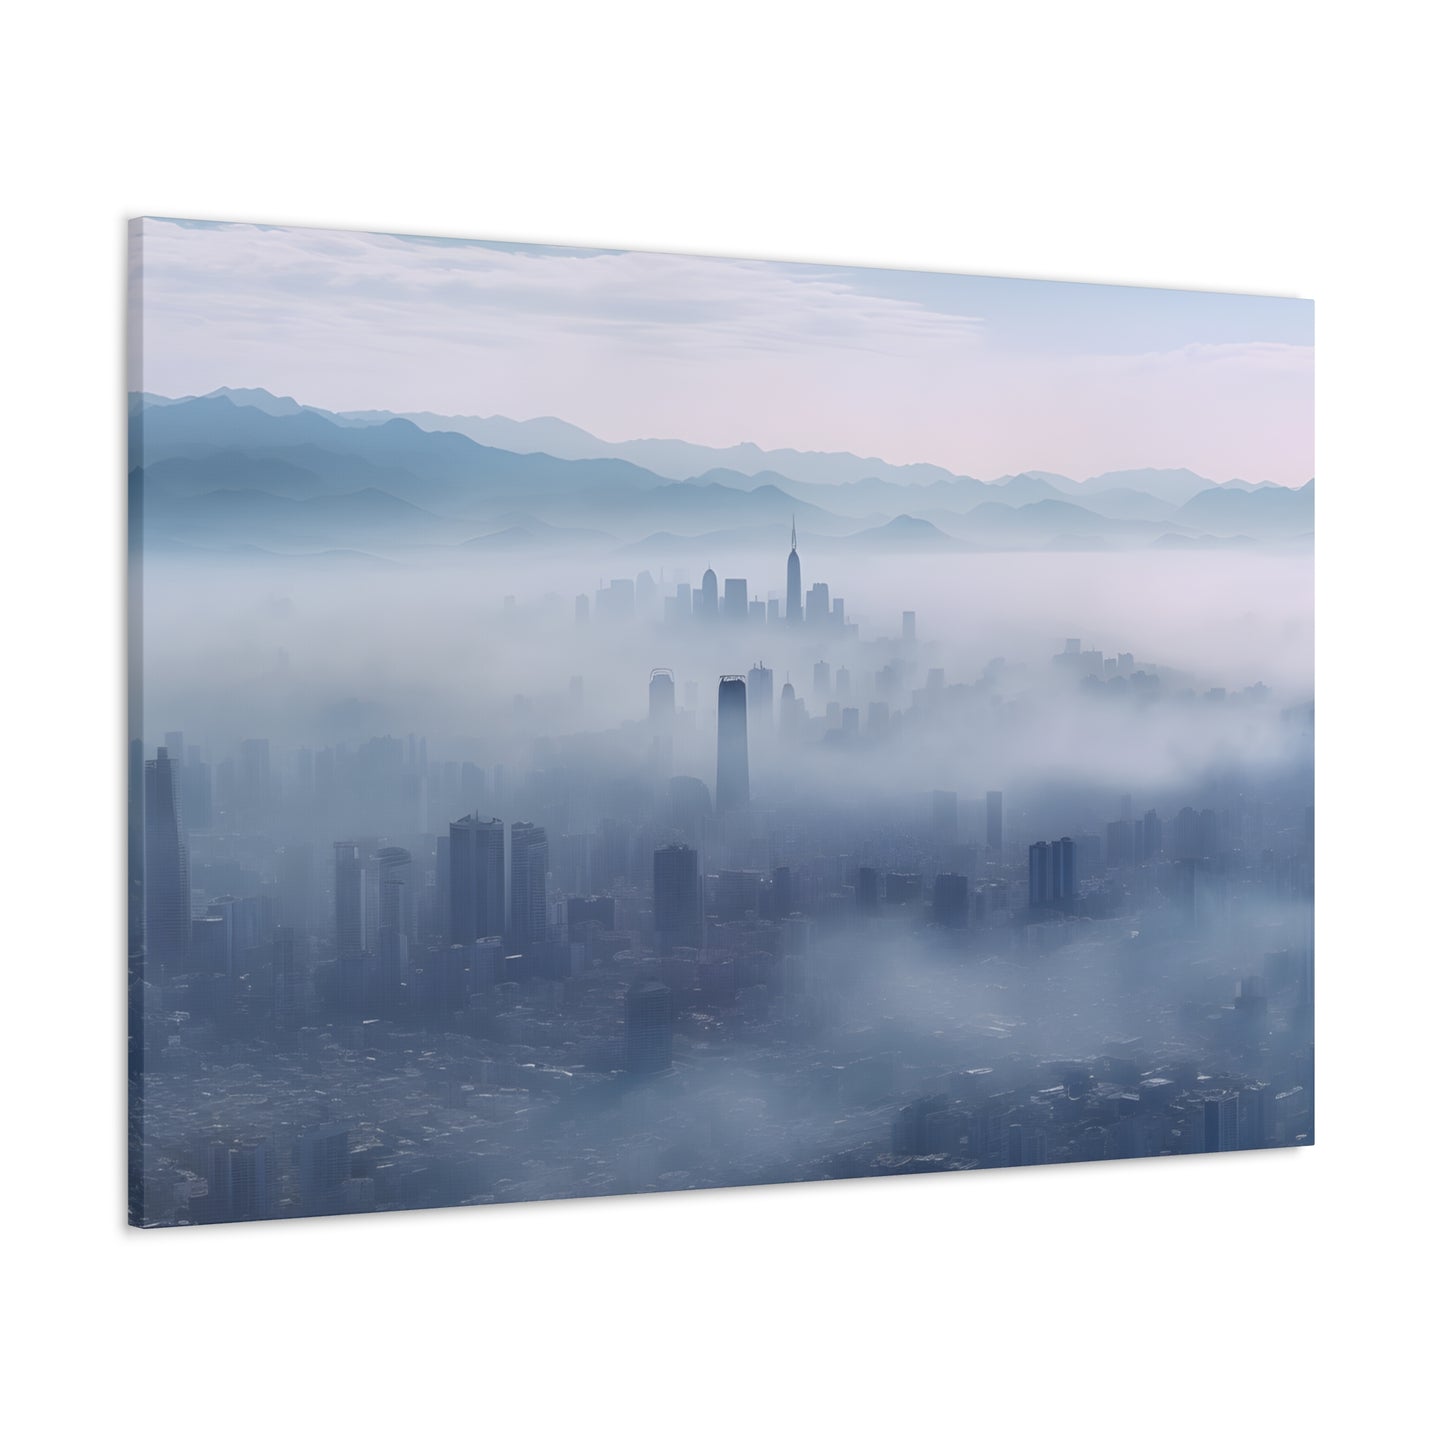 Smog City (Climate Change)